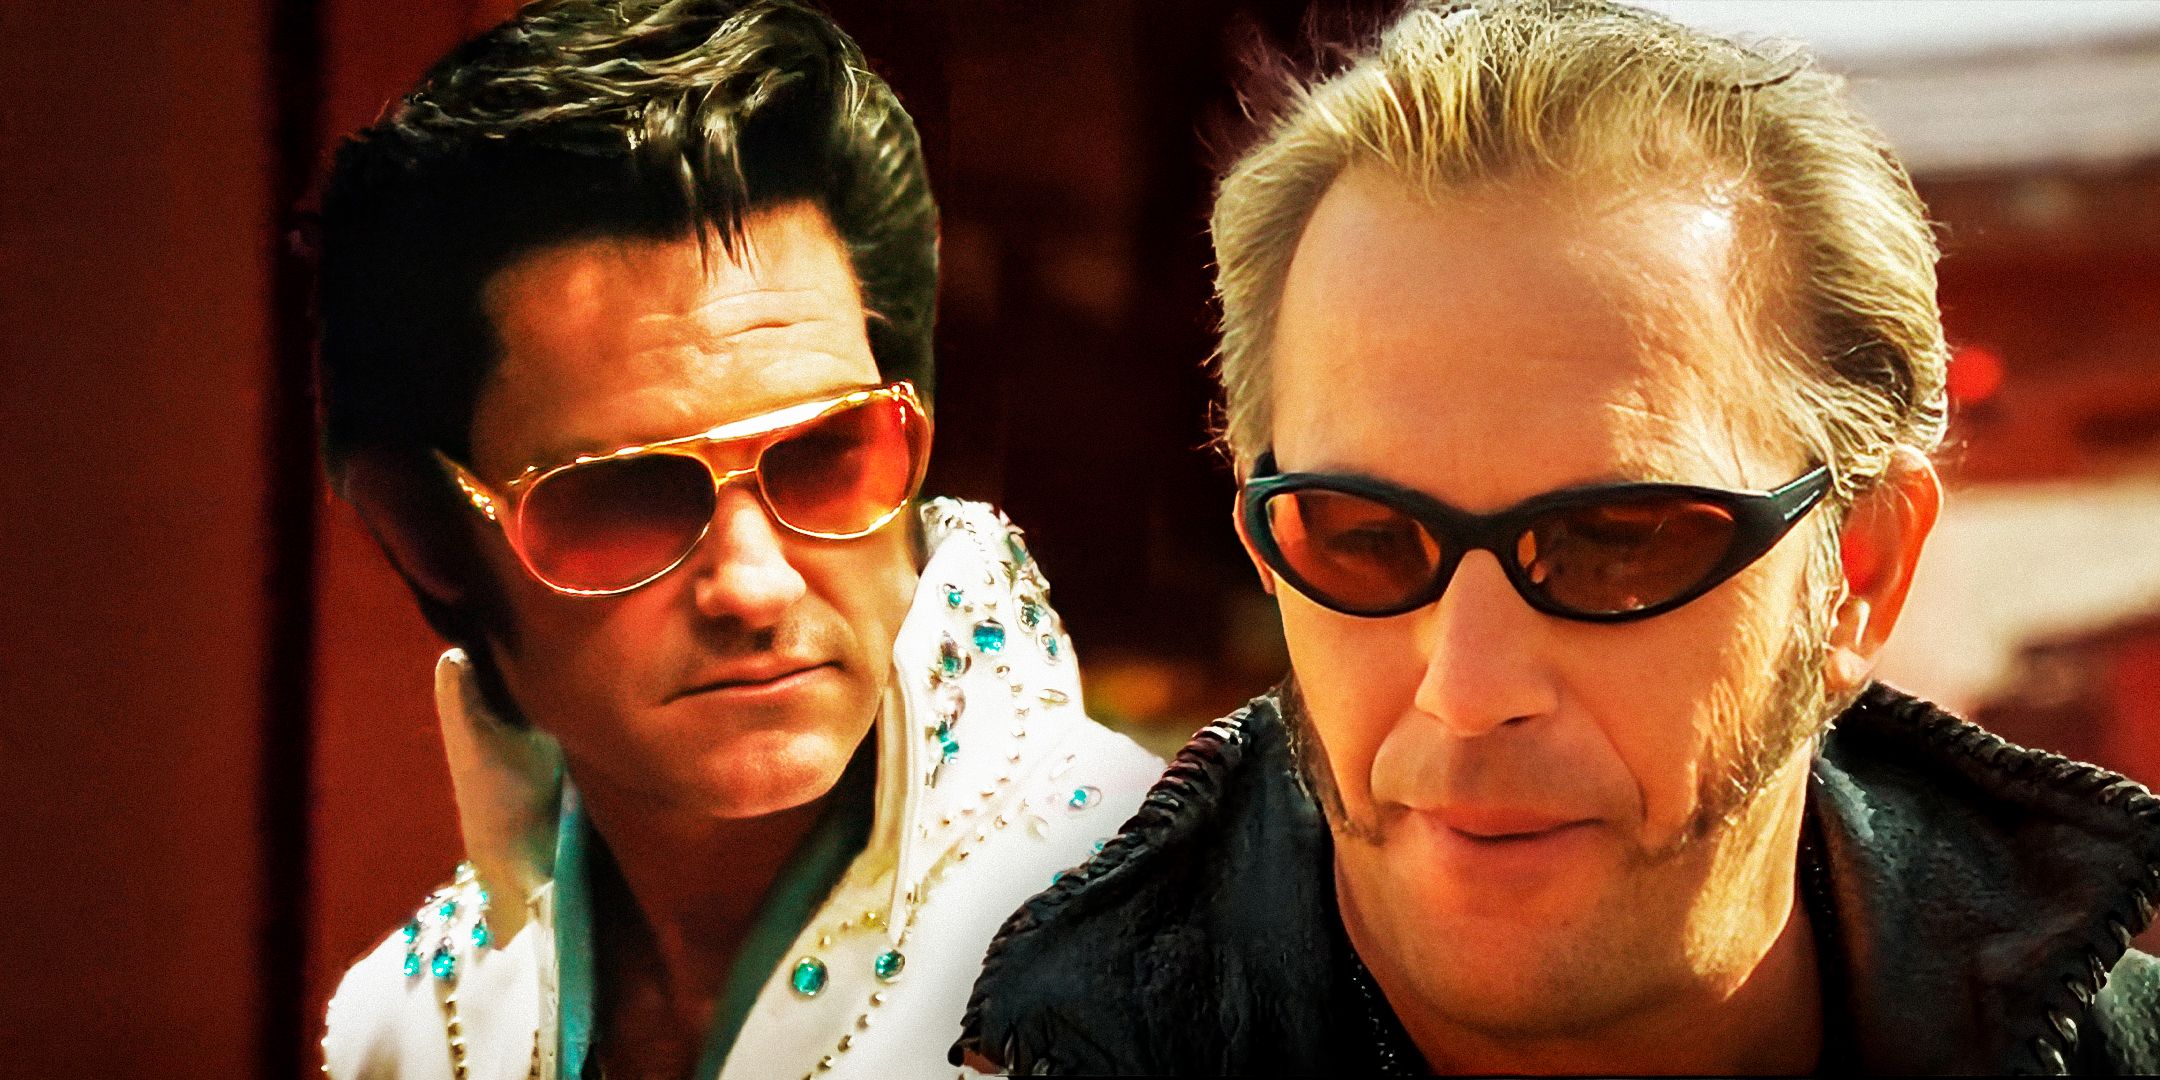 Kevin Costner sebagai Murphy dengan kacamata hitam dan Kurt Russell sebagai Michael Zane berpakaian seperti Elvis dari 3000 Miles to Graceland